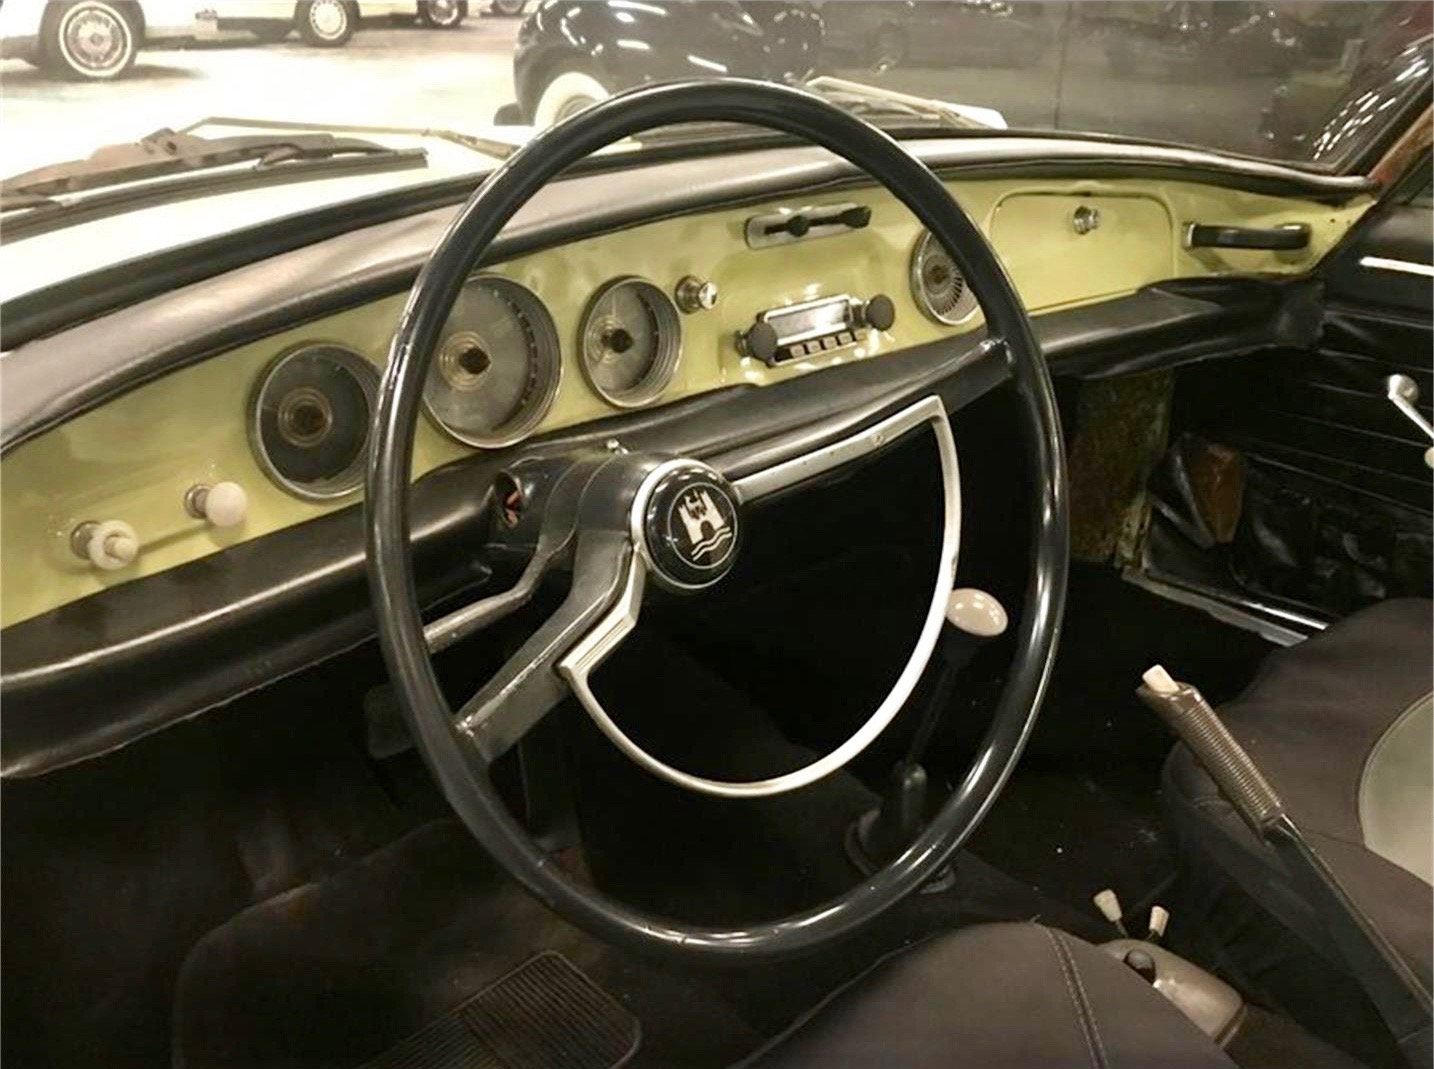 1966 Volkswagen, Type 34 Karmann Ghia was VW’s ‘Razor’s Edge’, ClassicCars.com Journal